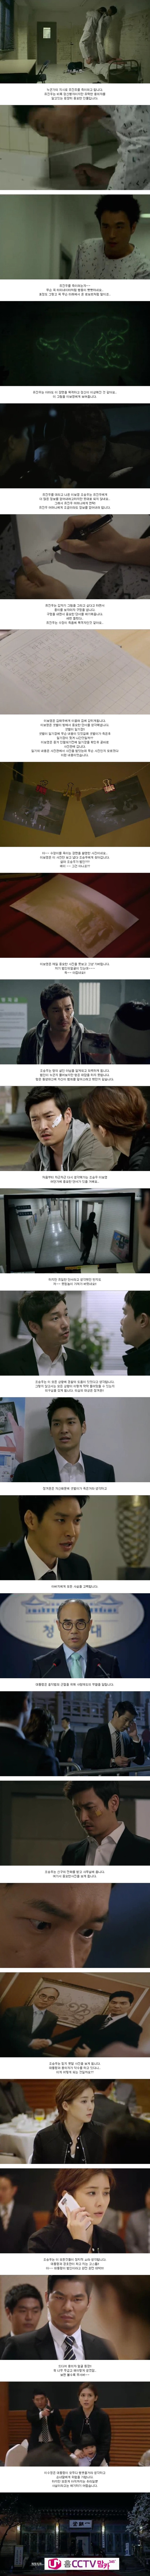 episode 13 captures for the Korean drama 'God's Gift - 14 Days'